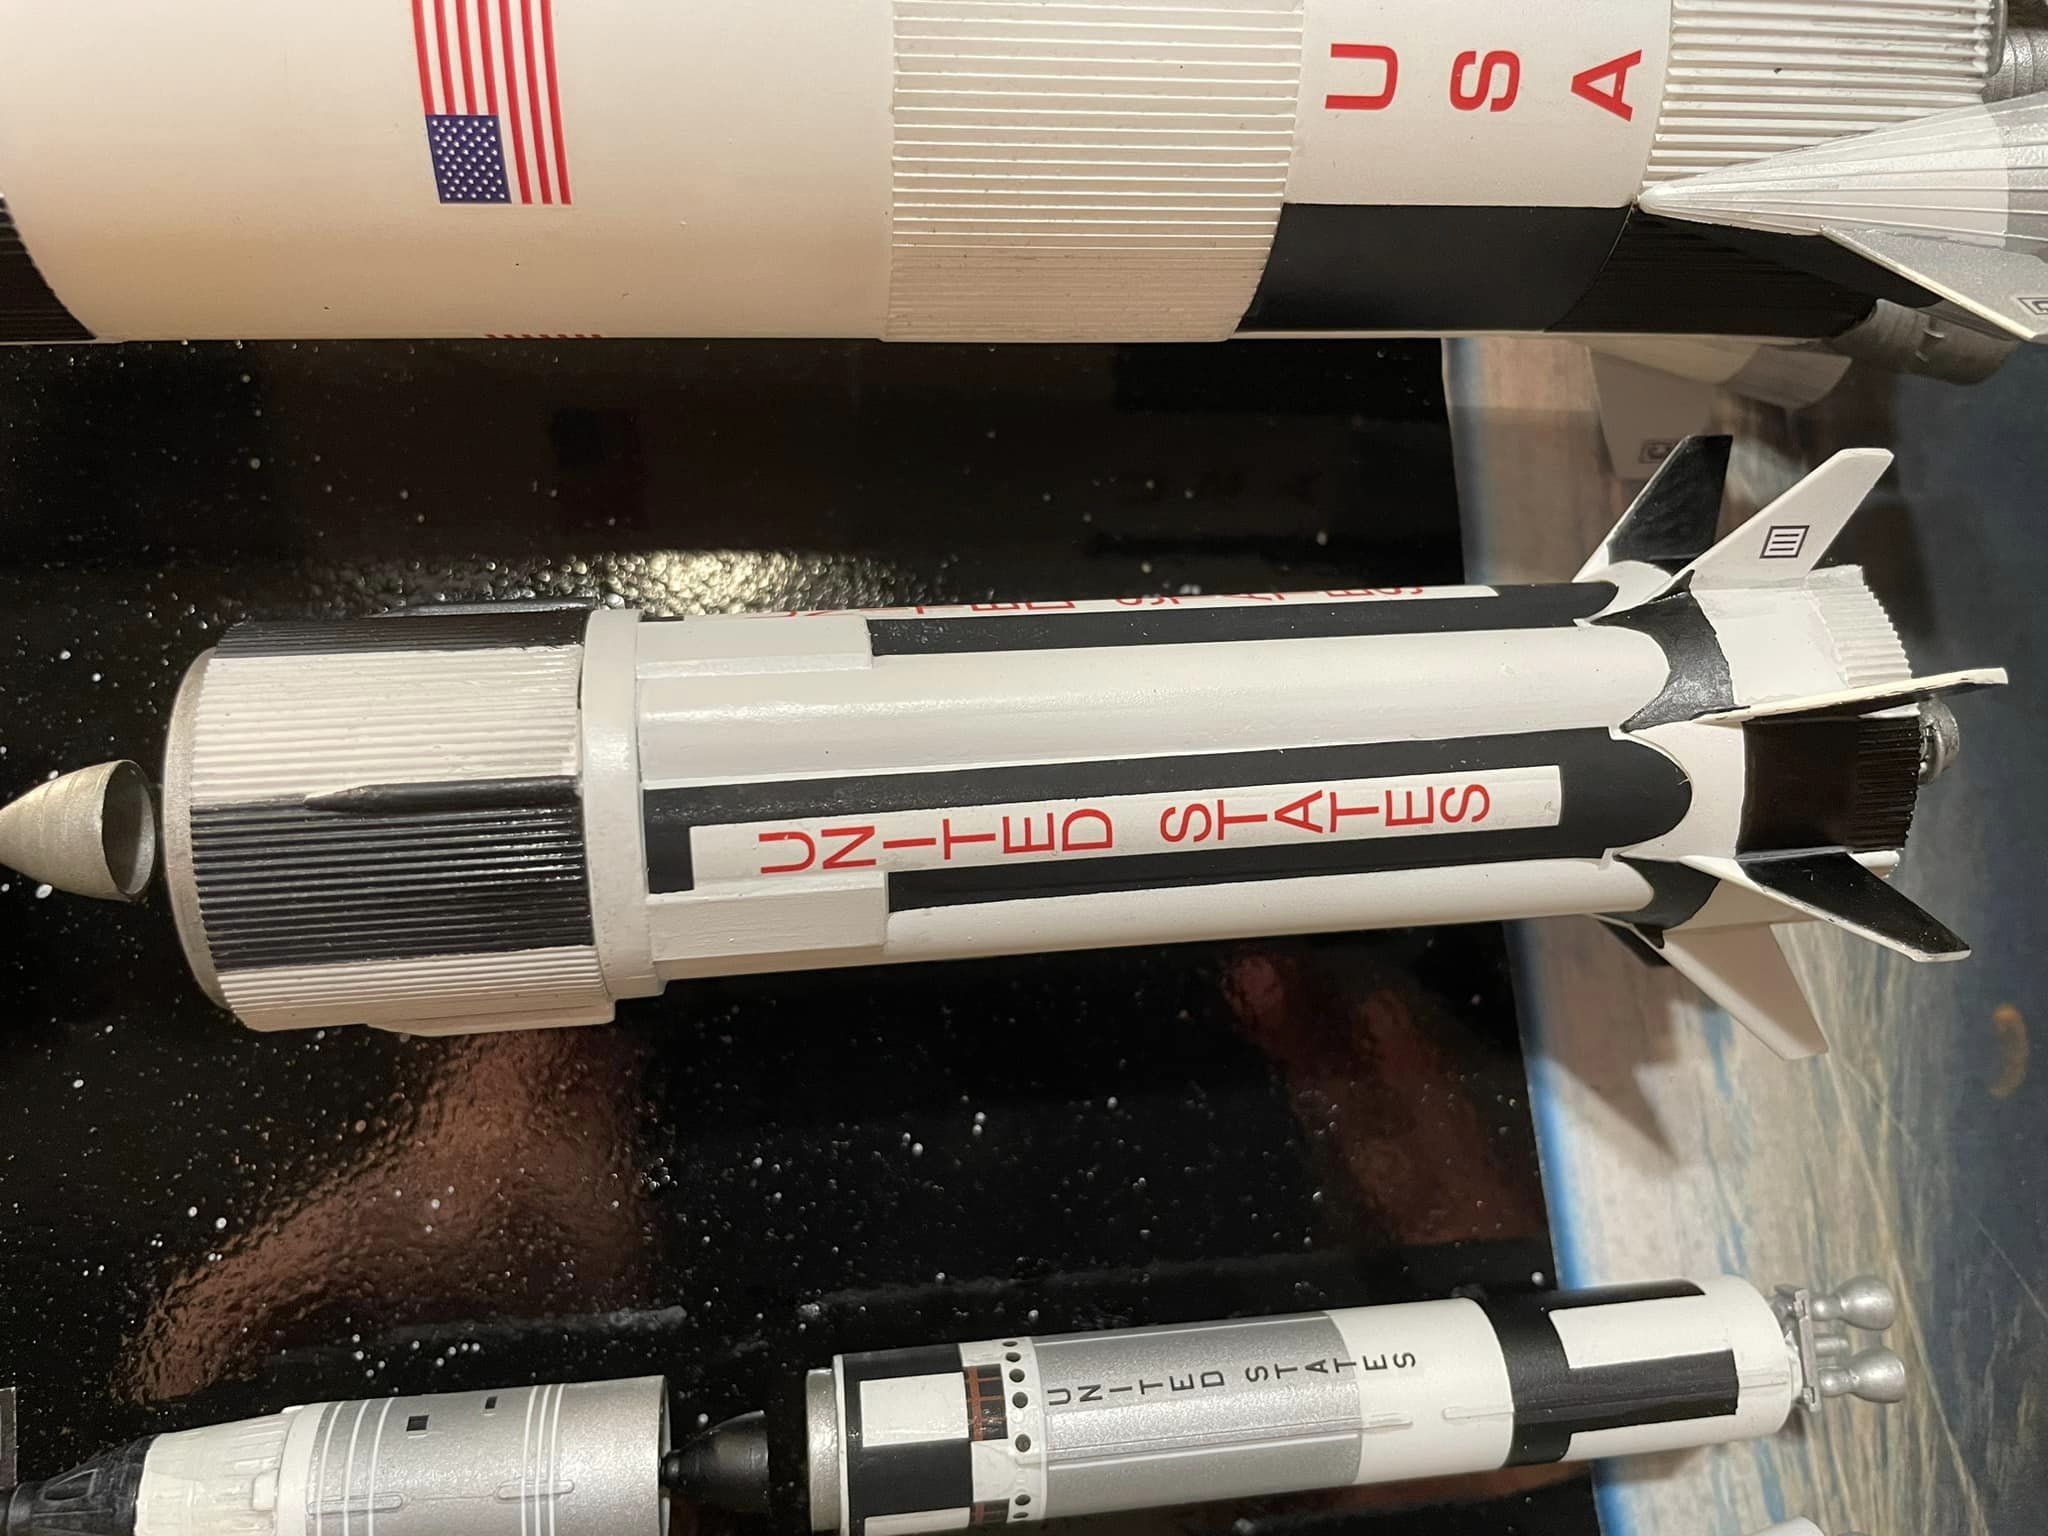 Manned NASA Rockets - Mercury, Gemini, and Apollo (AMT 1/200 w/ custom display)
